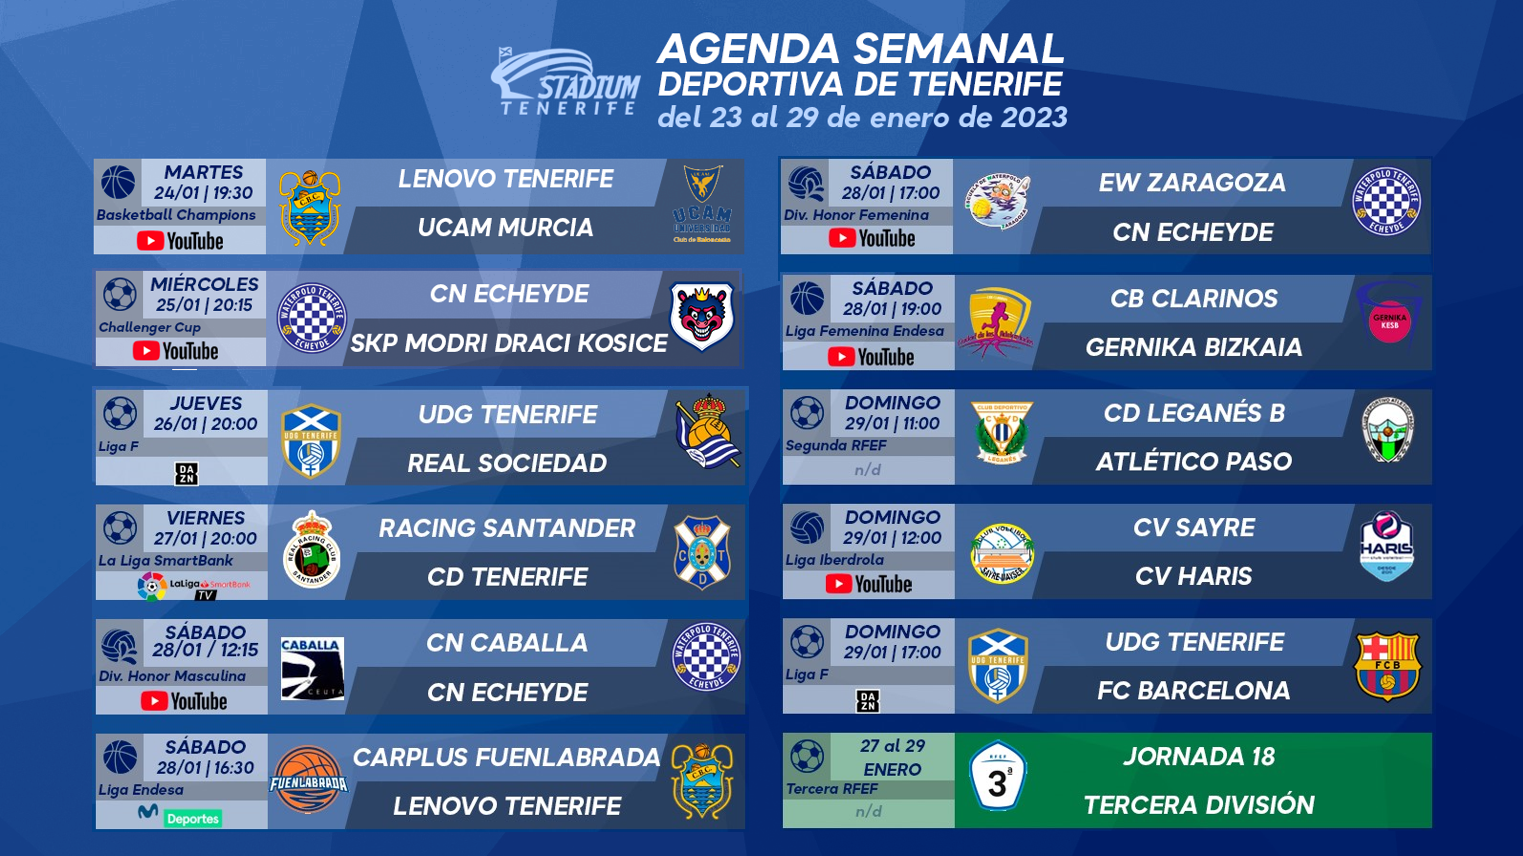 Agenda Semanal Deportiva de Tenerife (23 al 29 de enero)